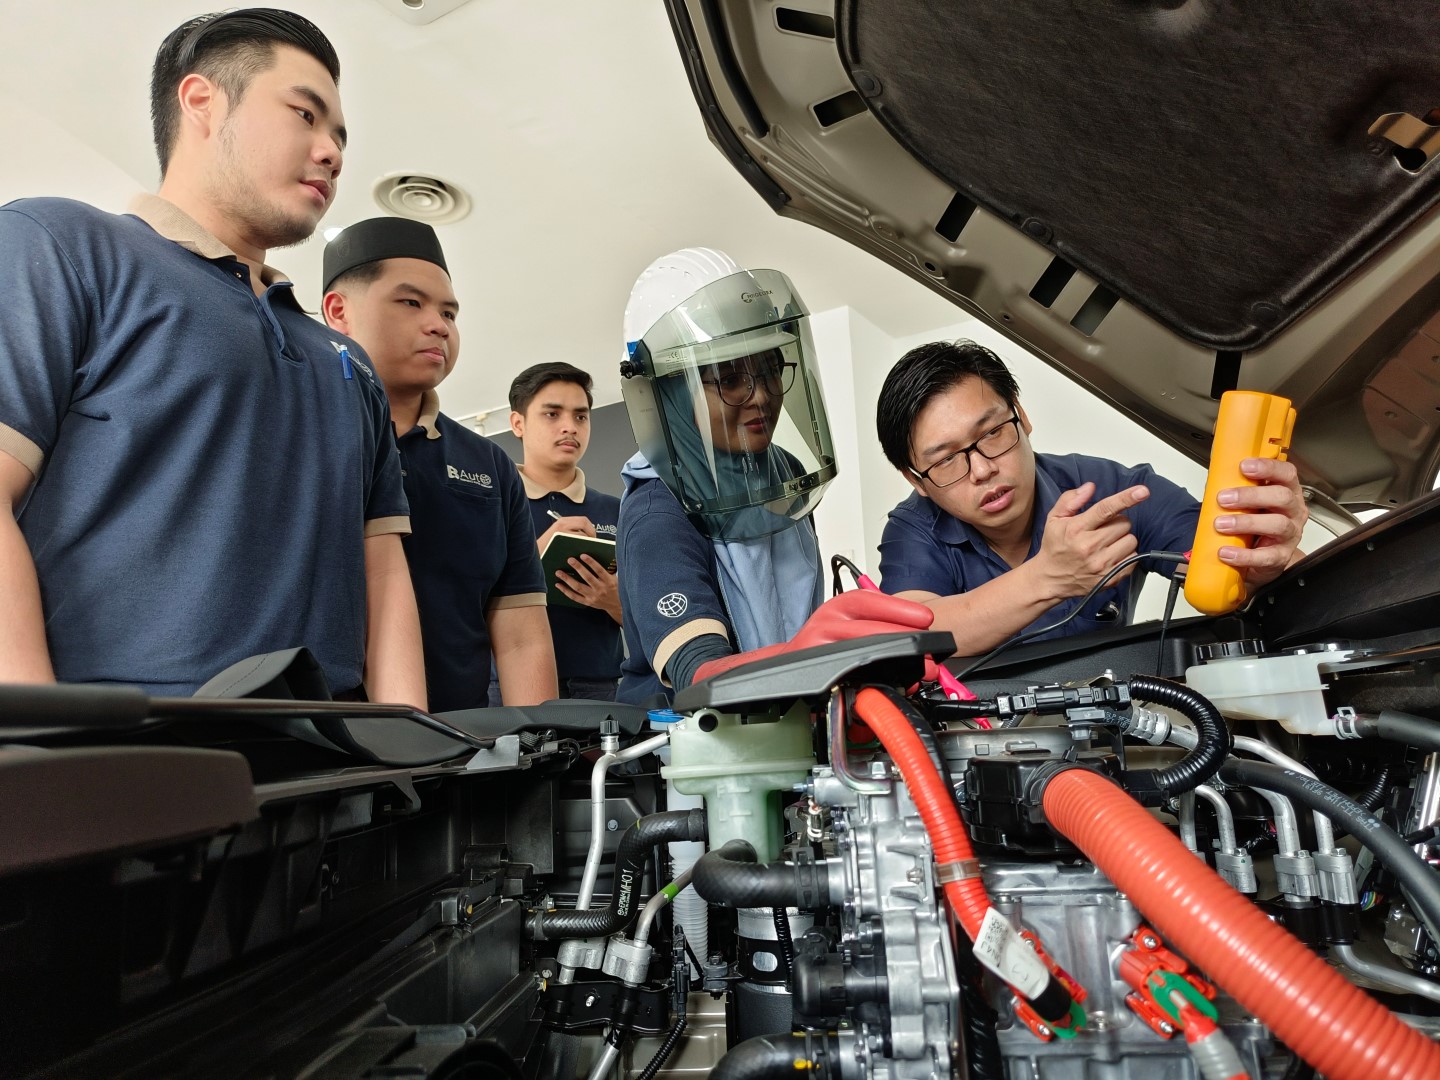 Bermaz Auto Apprentice graduates can now work in Saudi Arabia